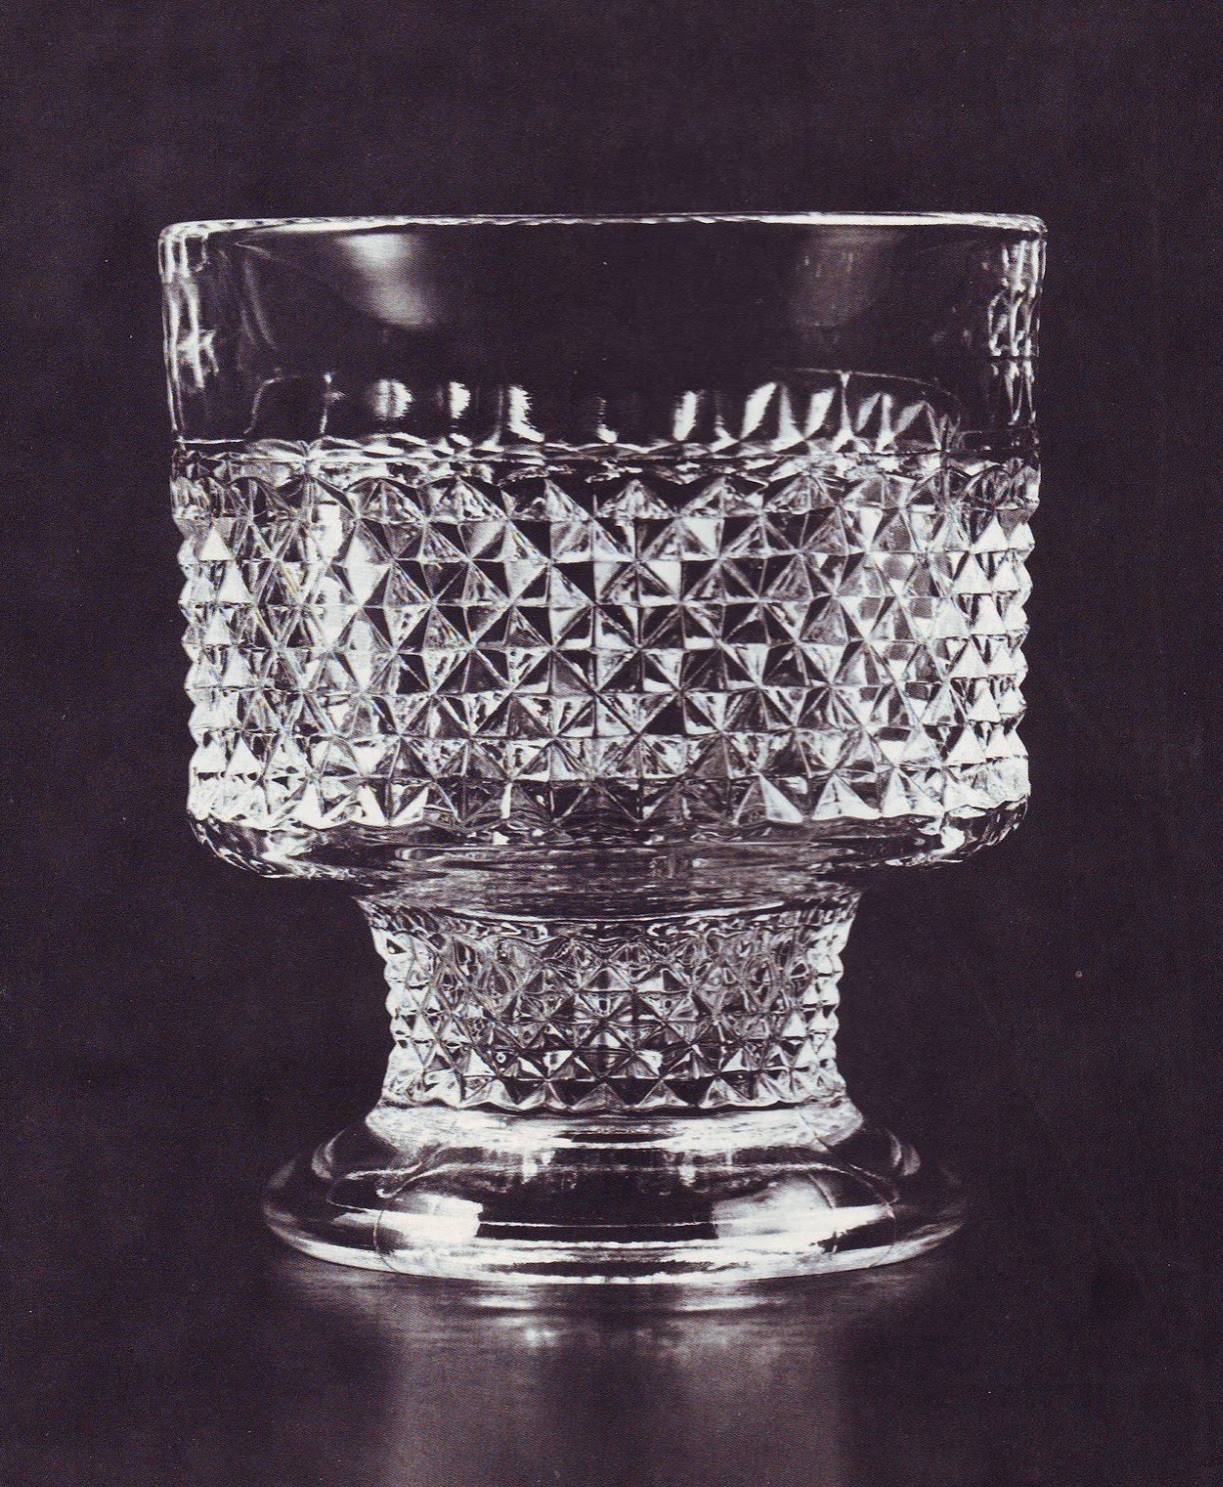 Libochovice - 3493/10, Glass